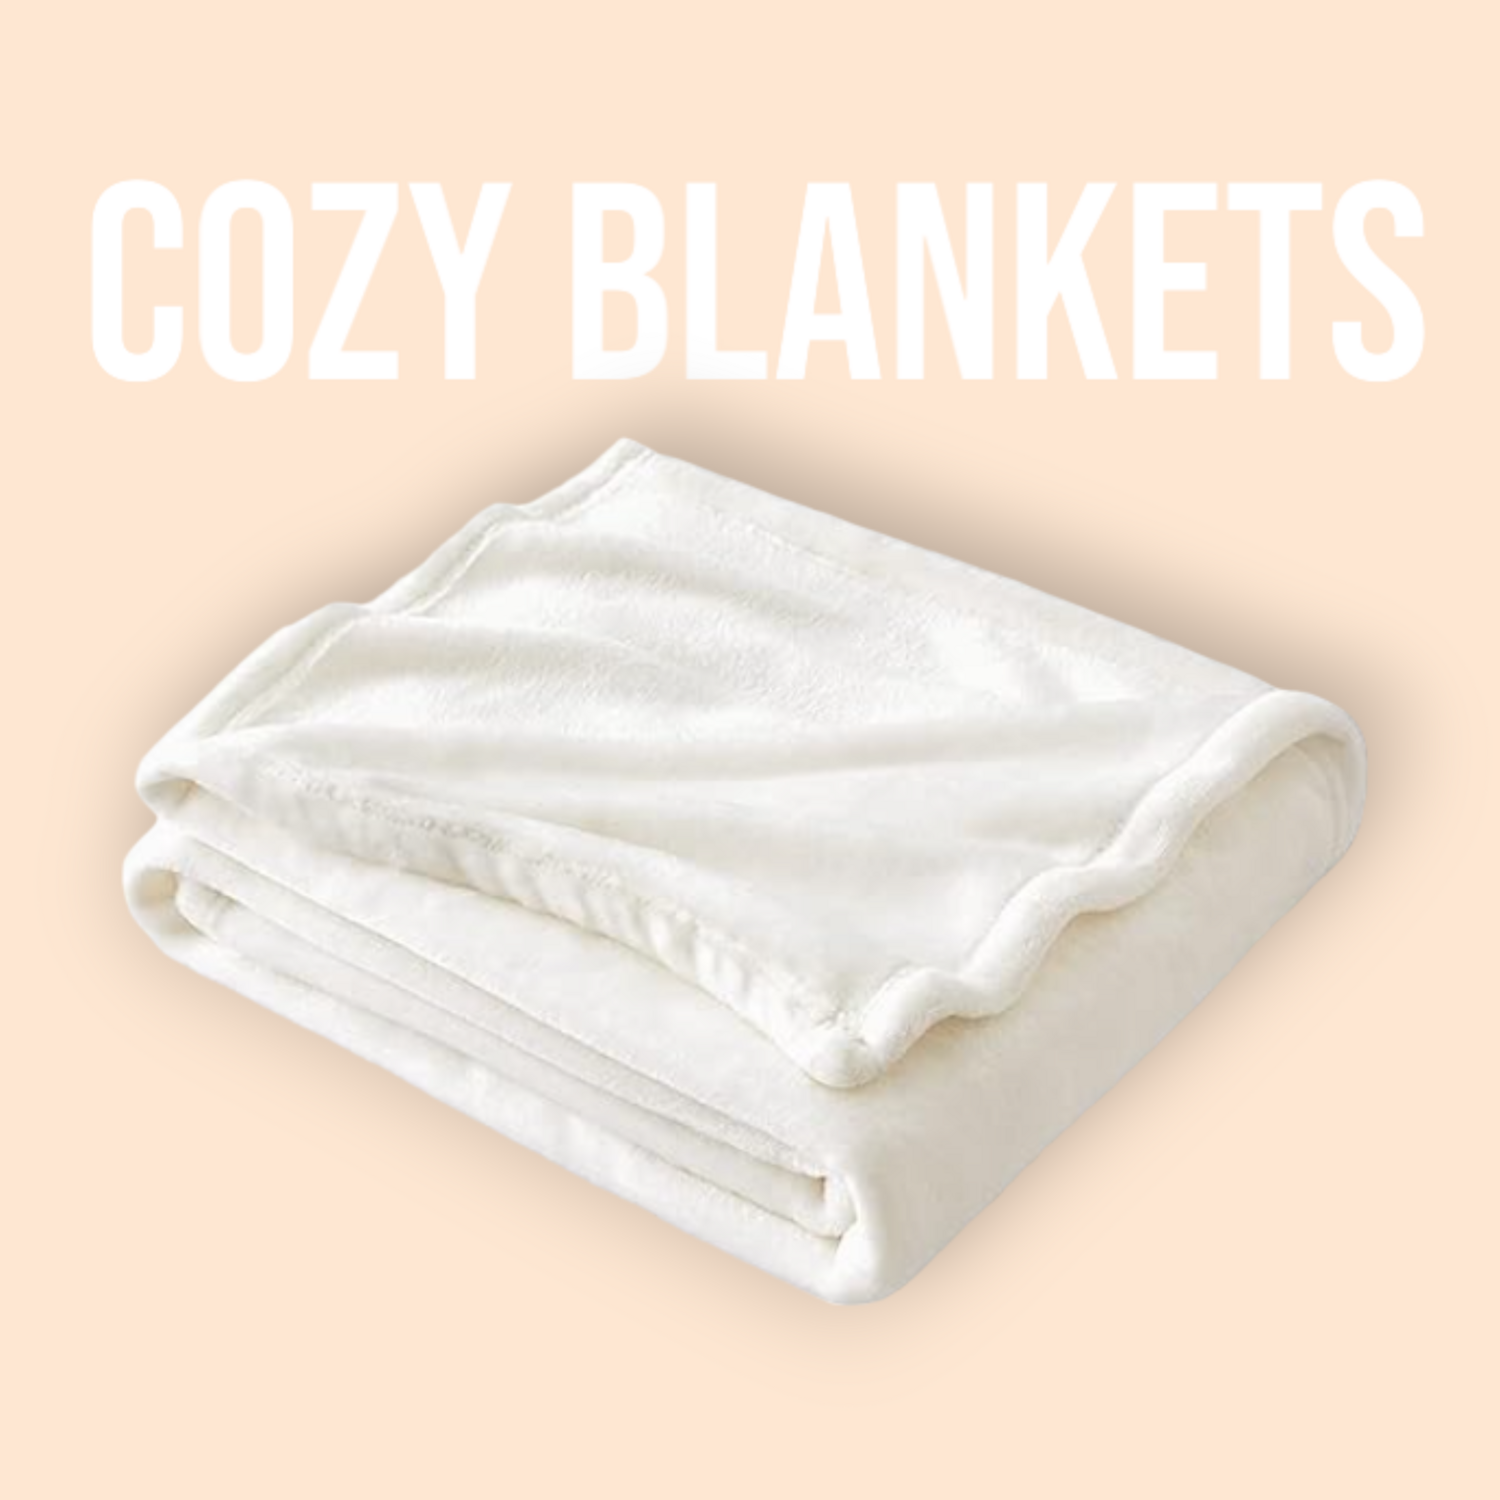 COZY BLANKETS - WHITE BLANKET -